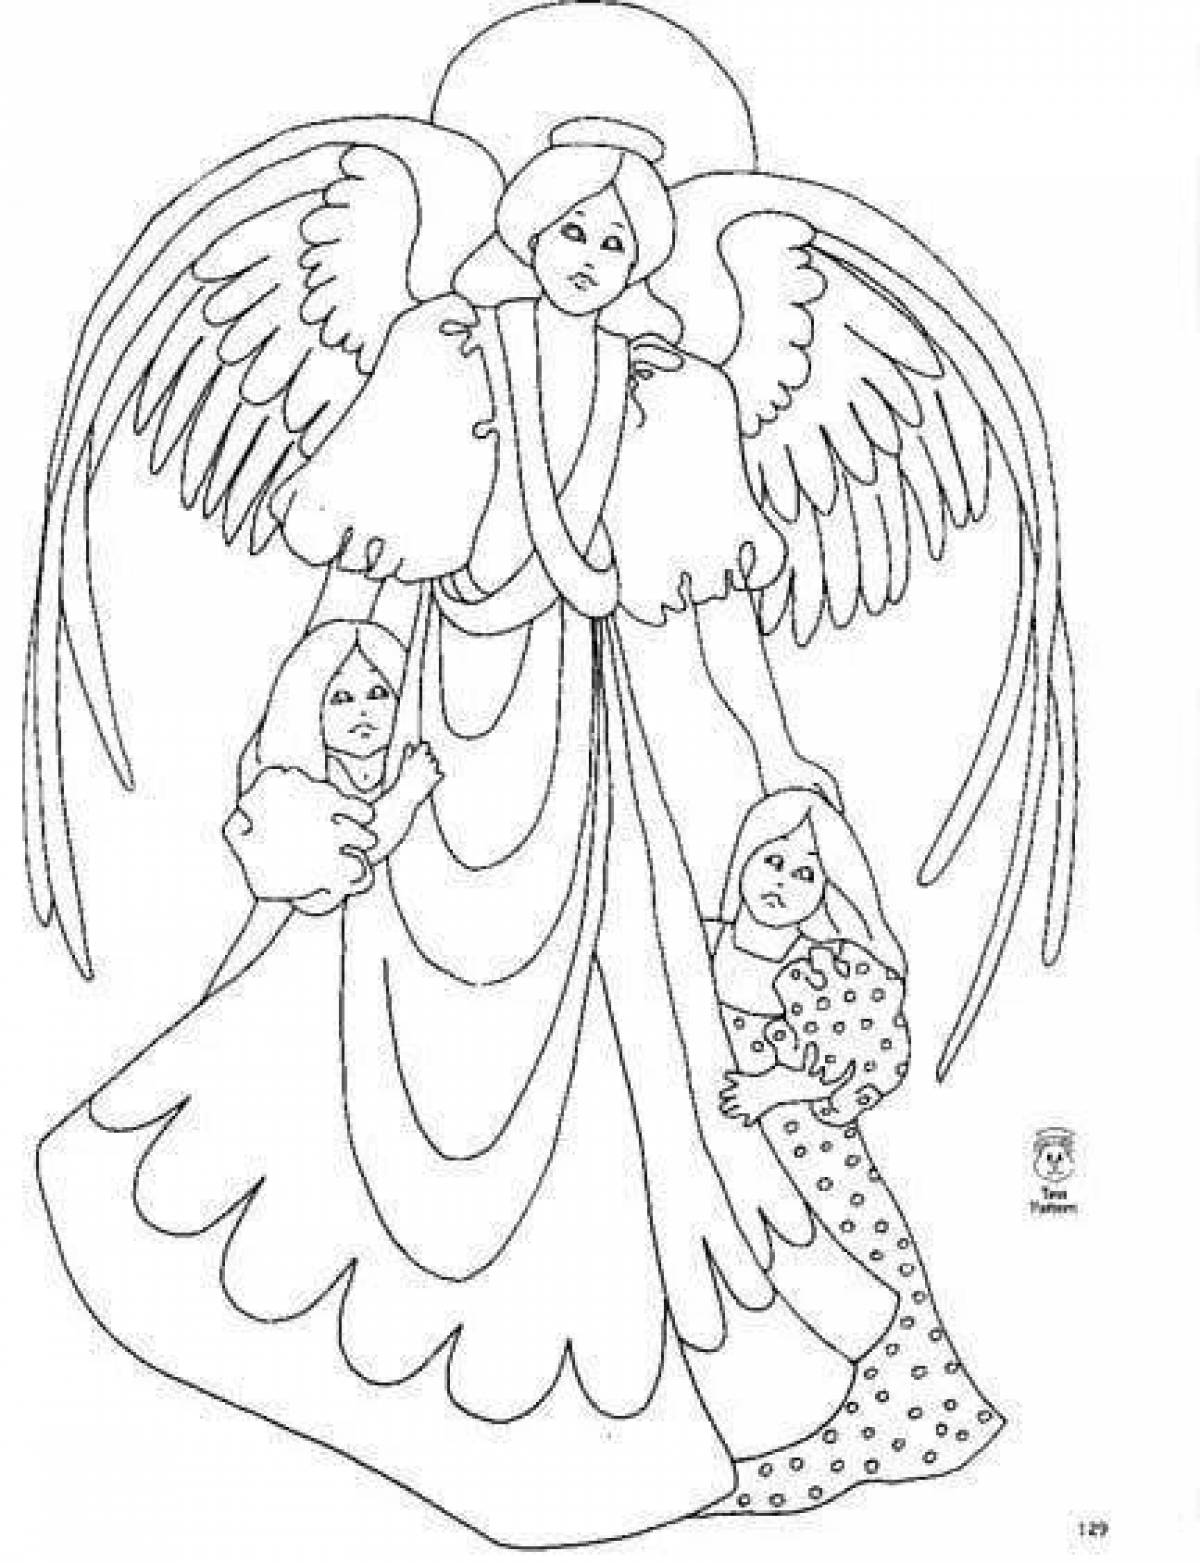 Изысканная раскраска ангела-хранителя